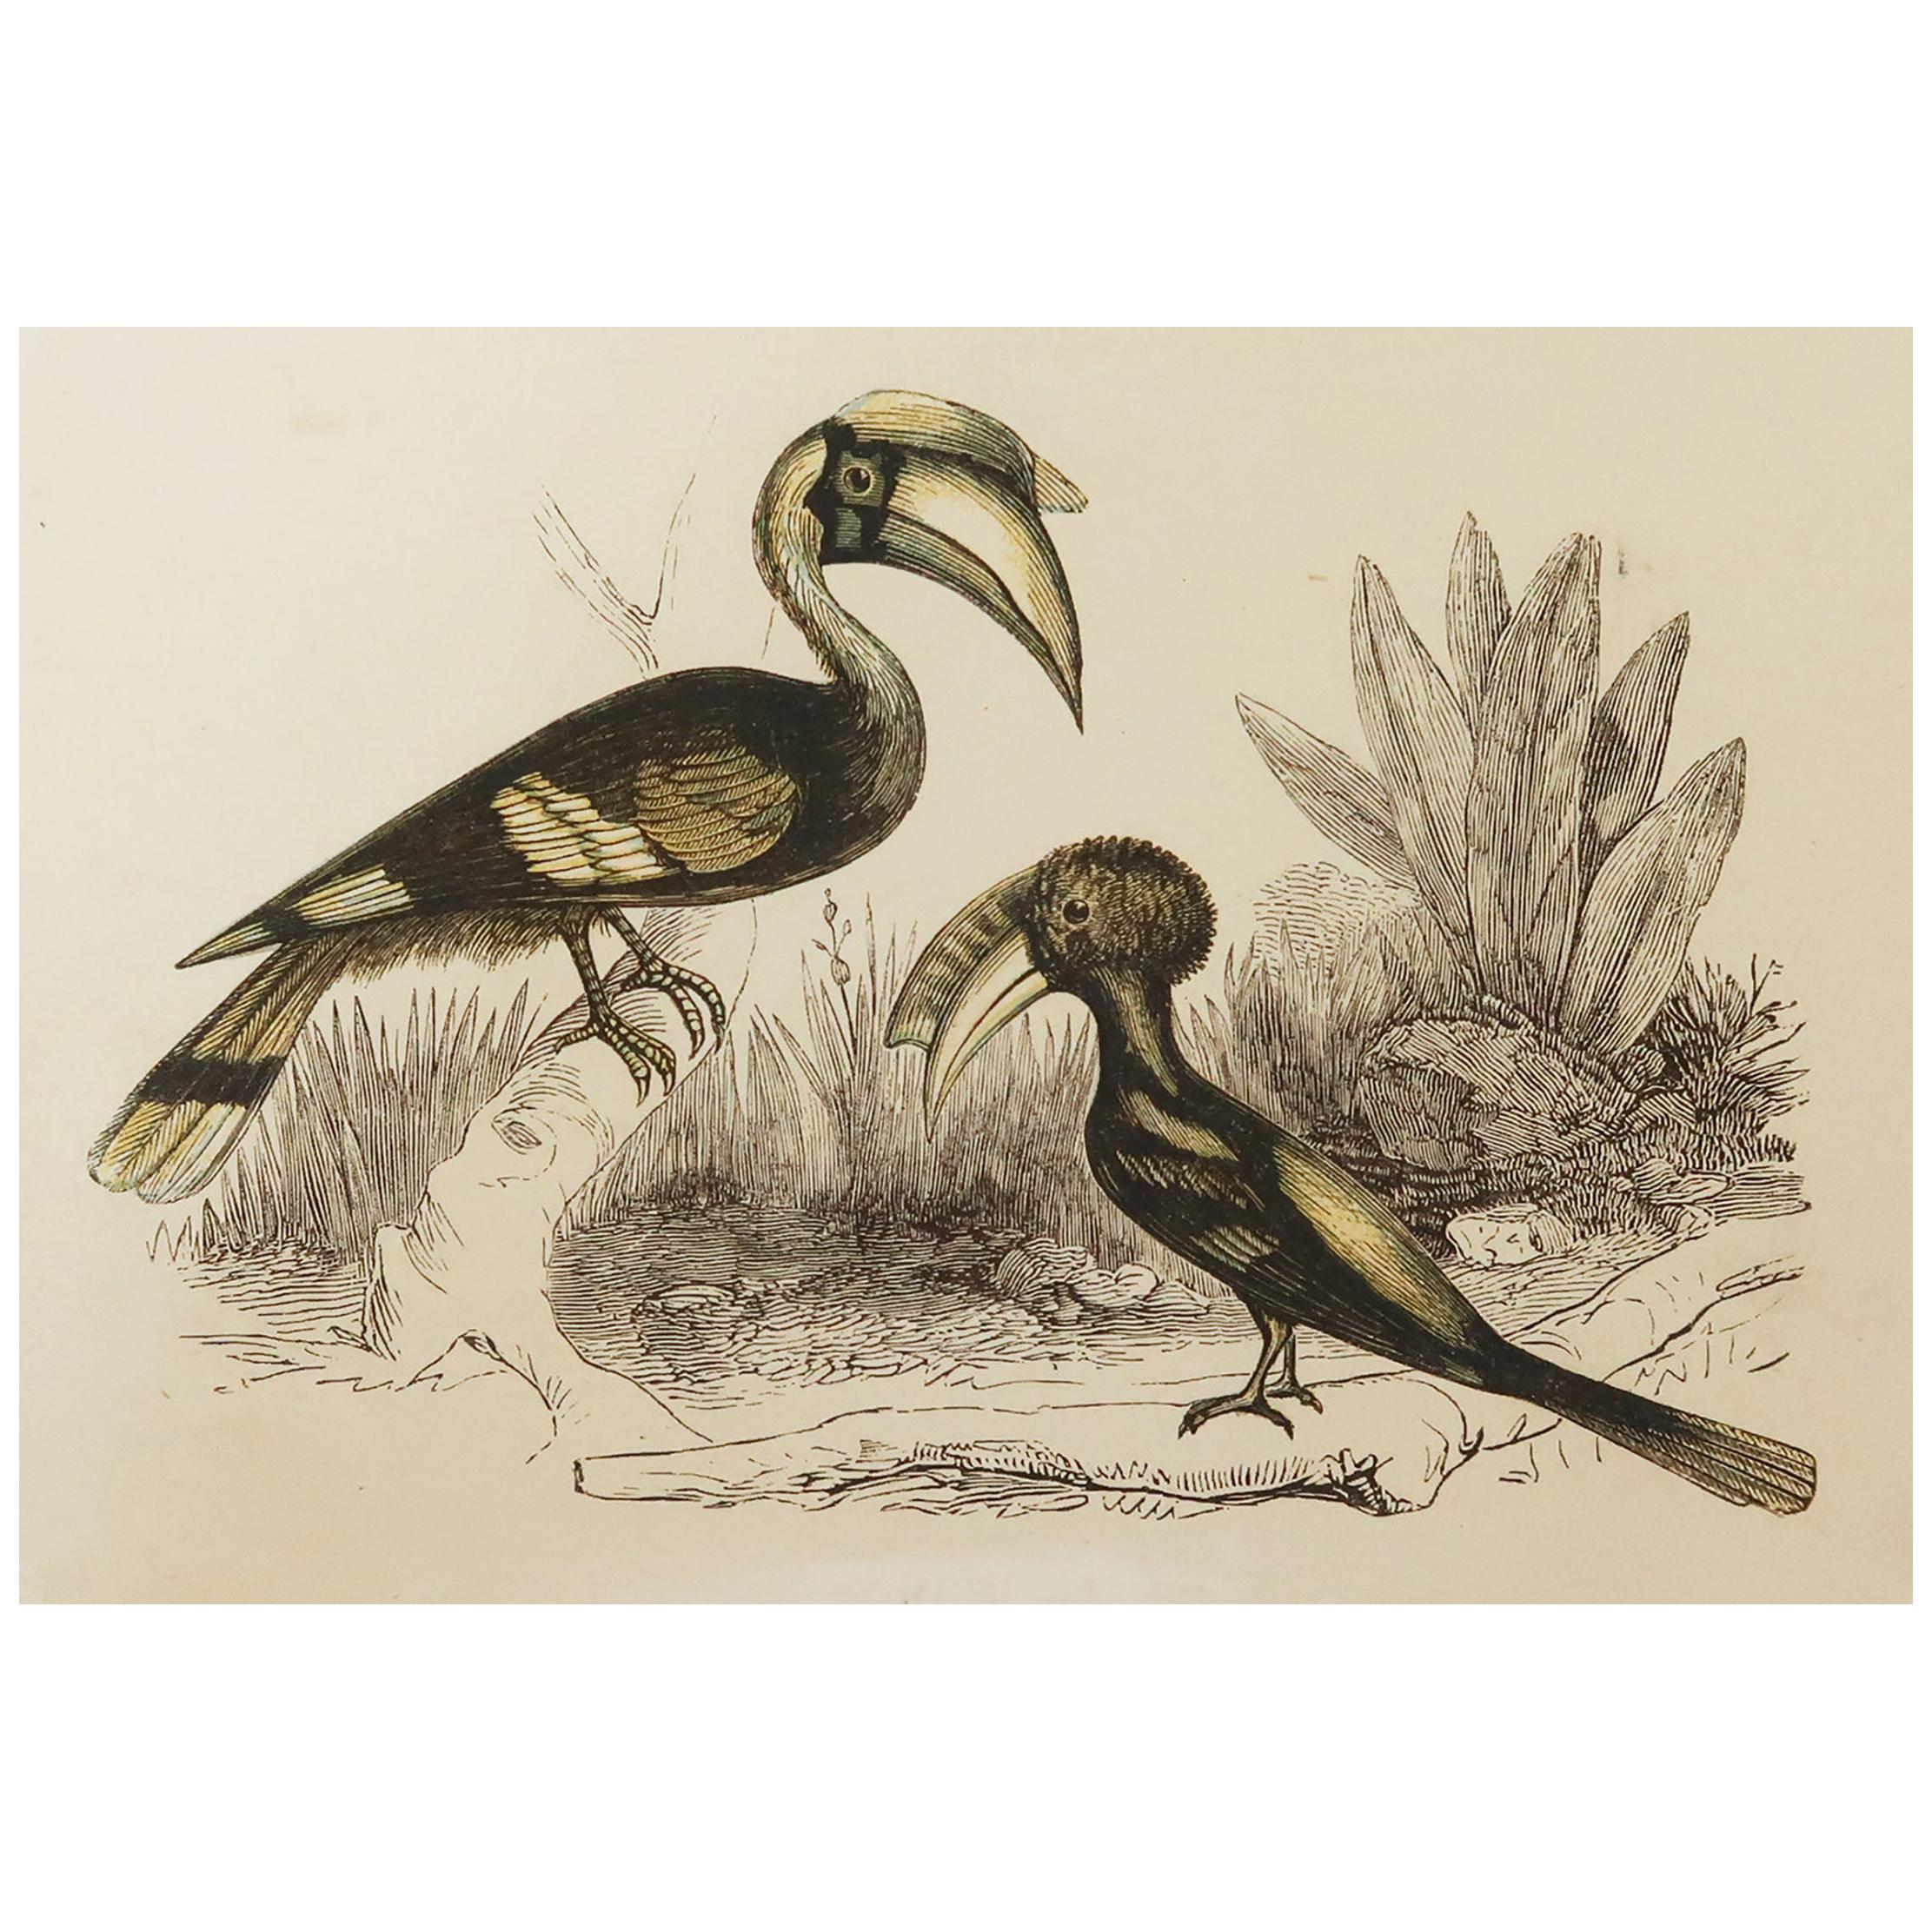 Original Antique Bird Print, the Hornbill, Tallis, circa 1850